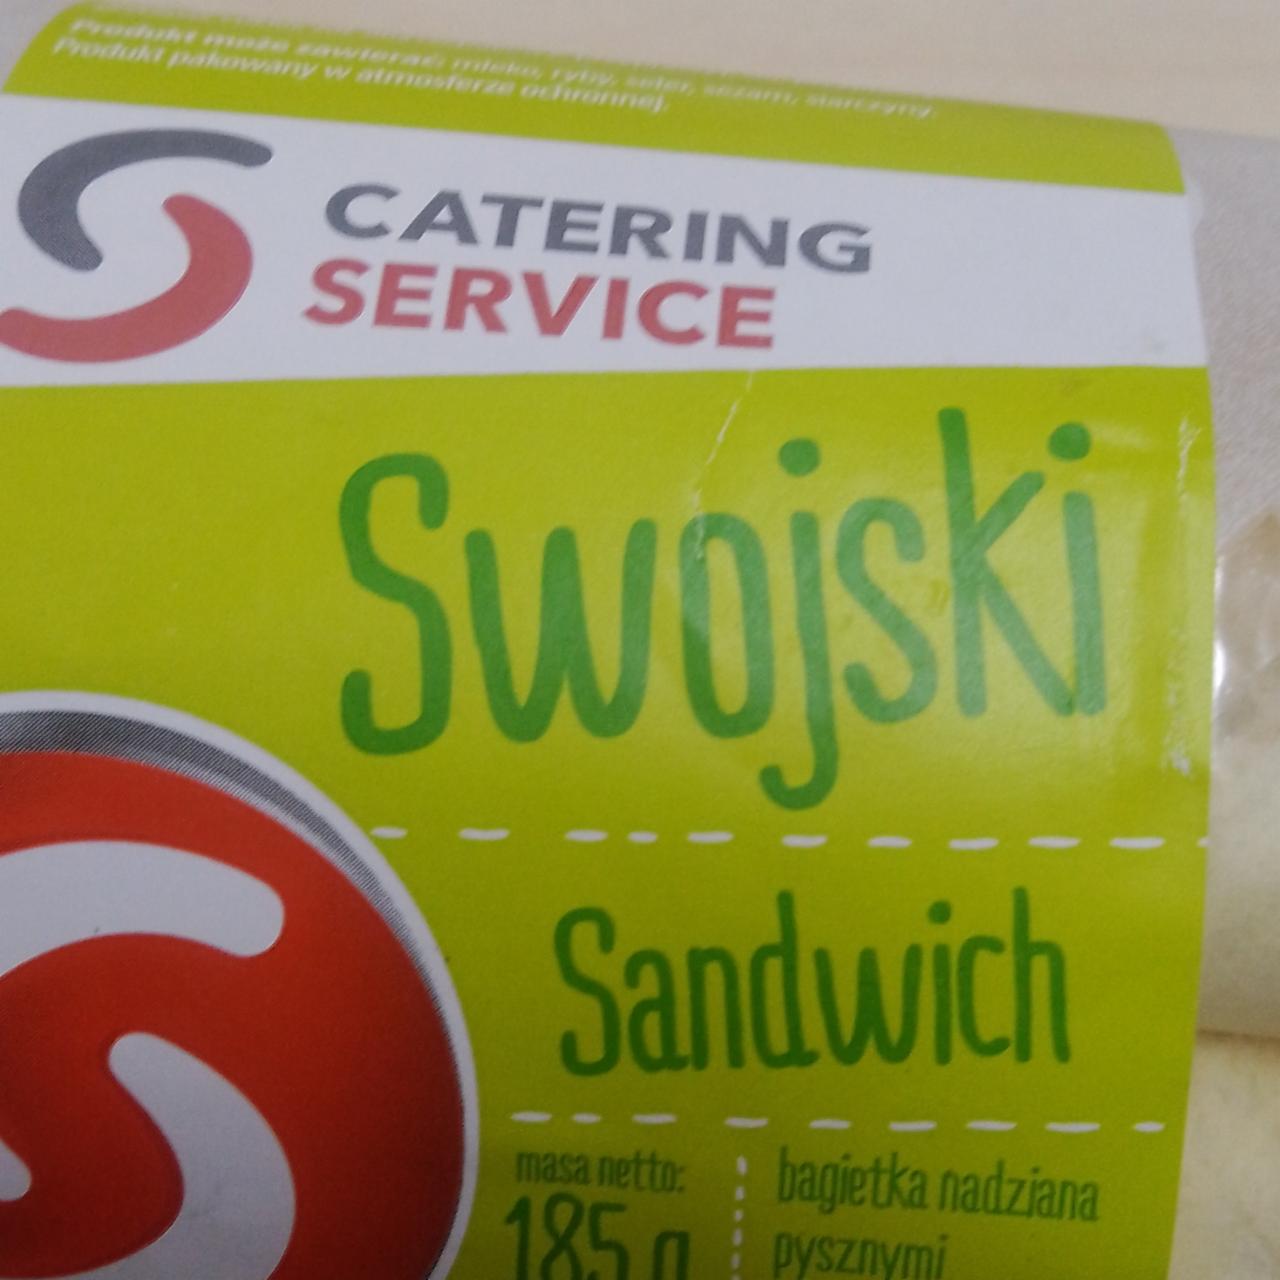 Zdjęcia - Swojska sandwich Catering Service